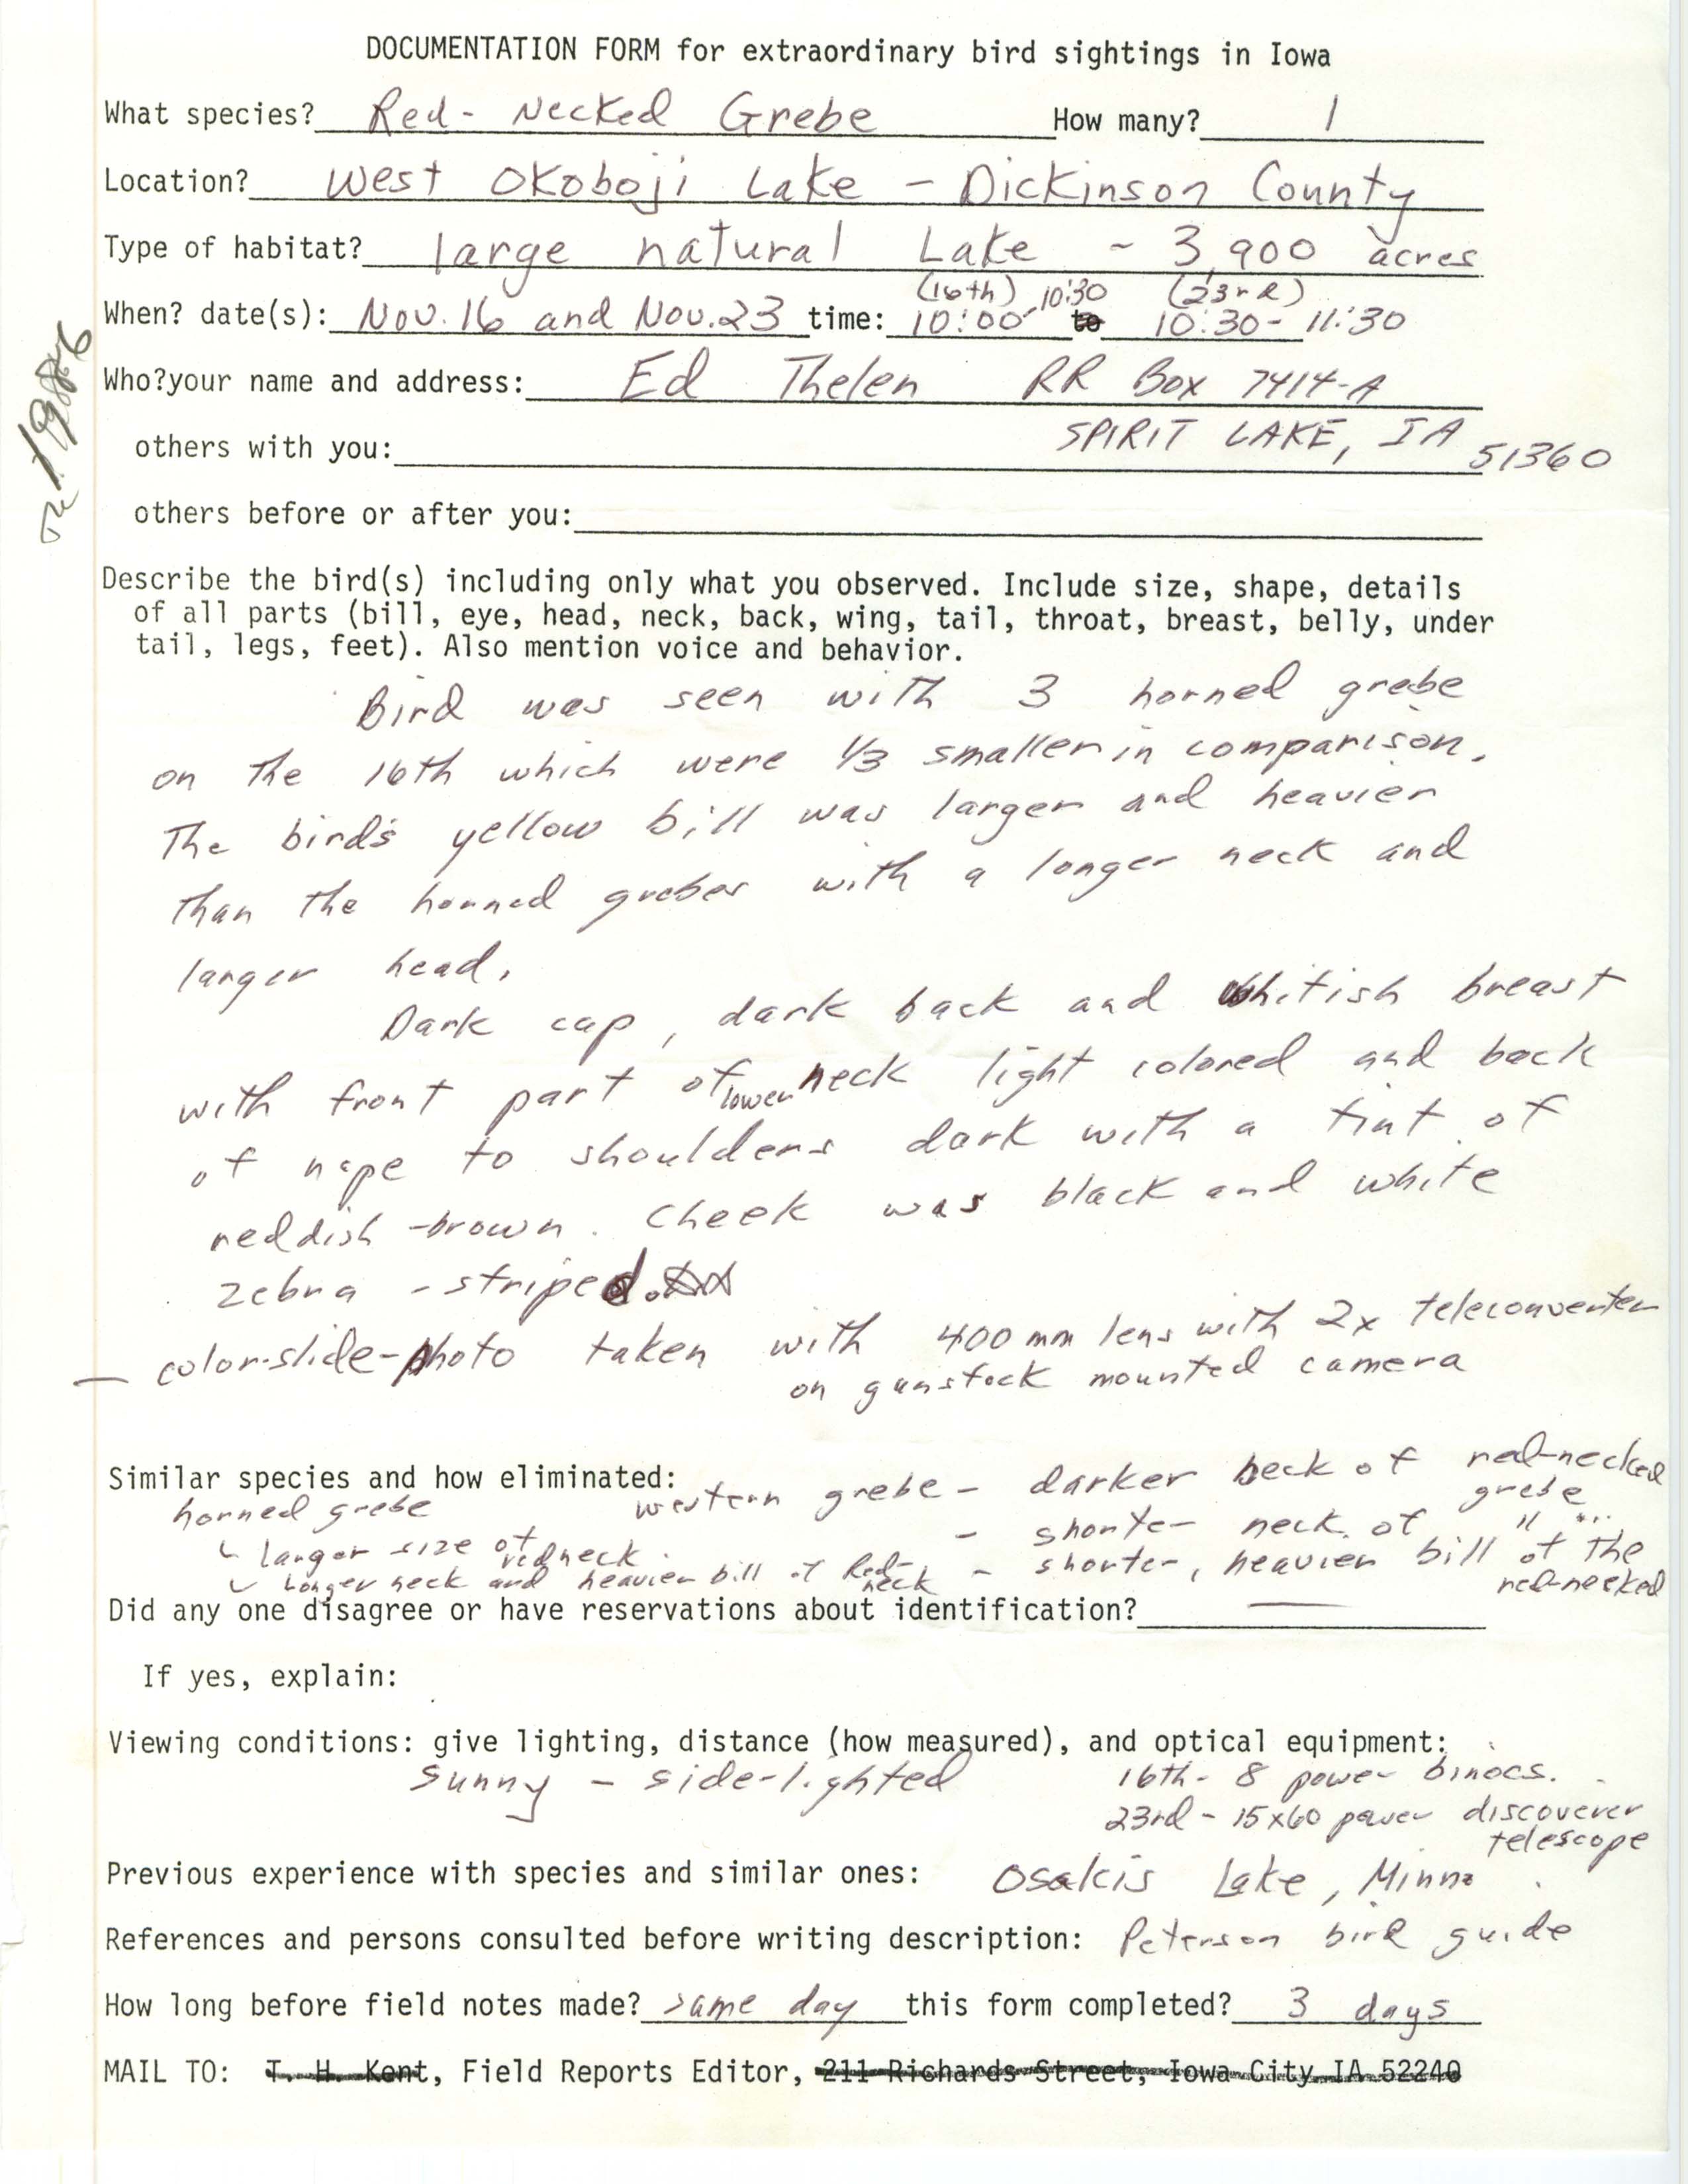 Rare bird documentation form for Red-necked Grebe at West Okoboji Lake, 1986